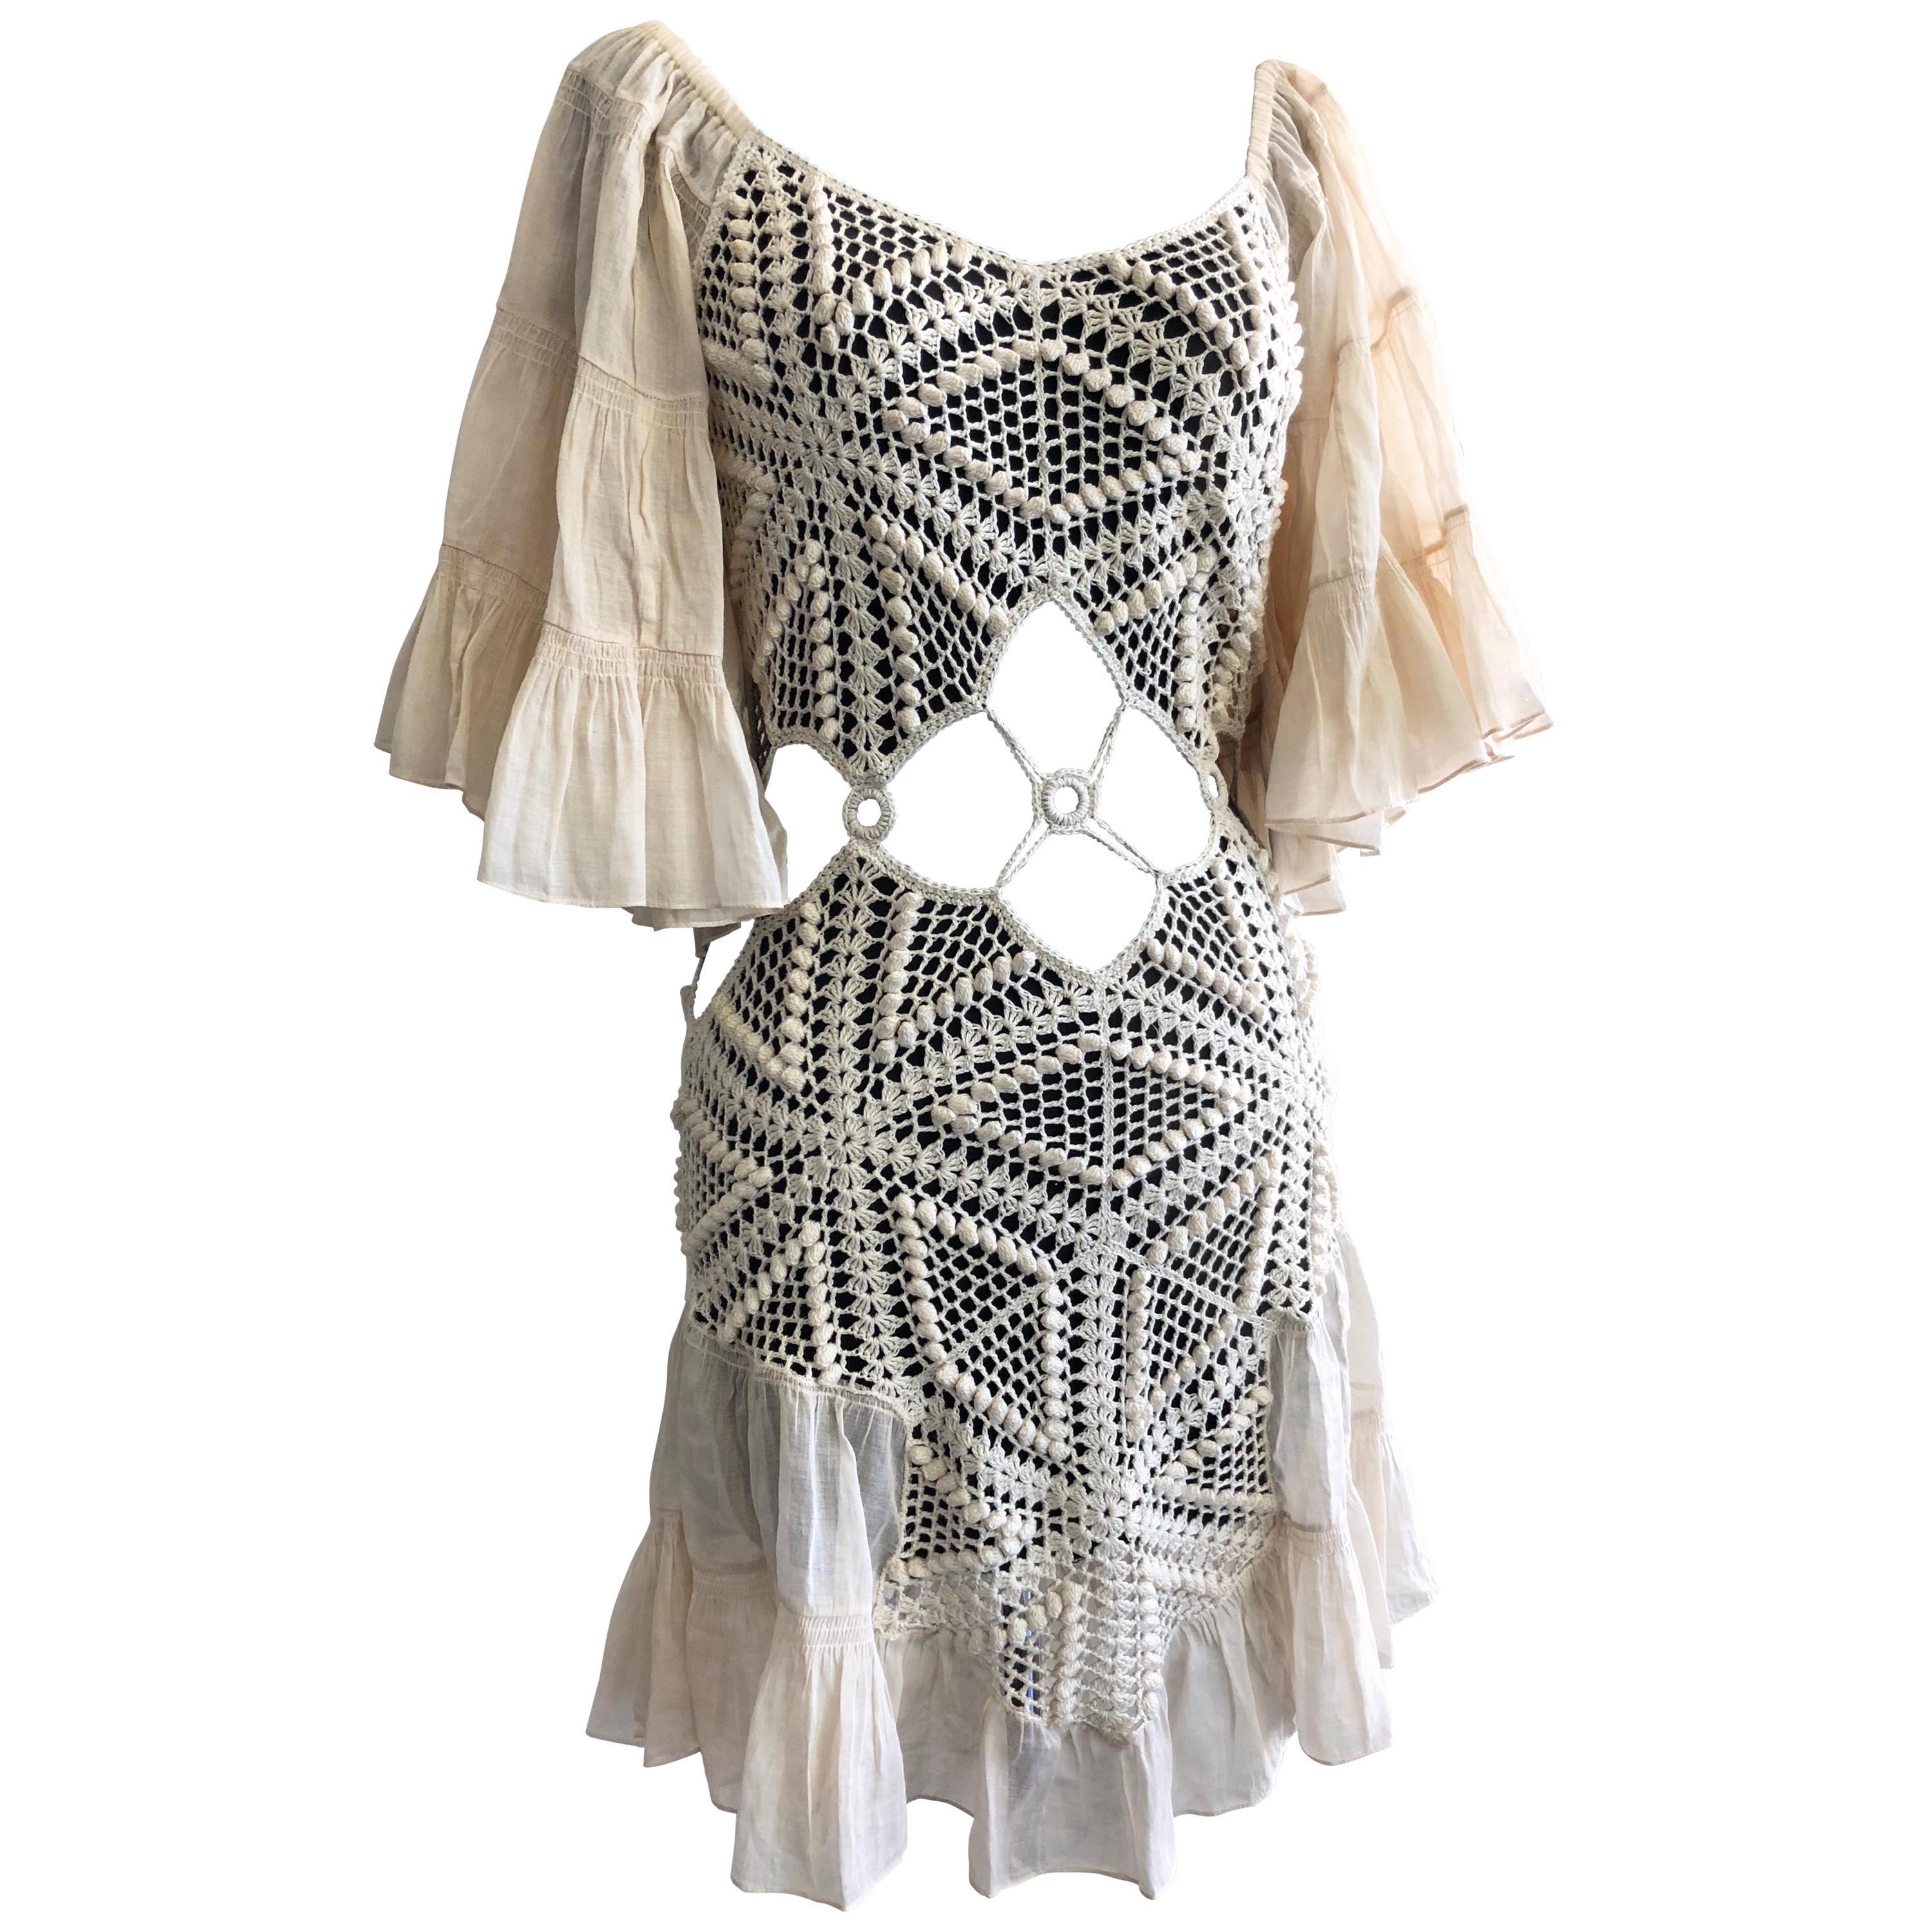 1970s-Style Peek-A-Boo Crochet Midriff Mini Dress W/ Cotton Ruffle Sleeves & Hem